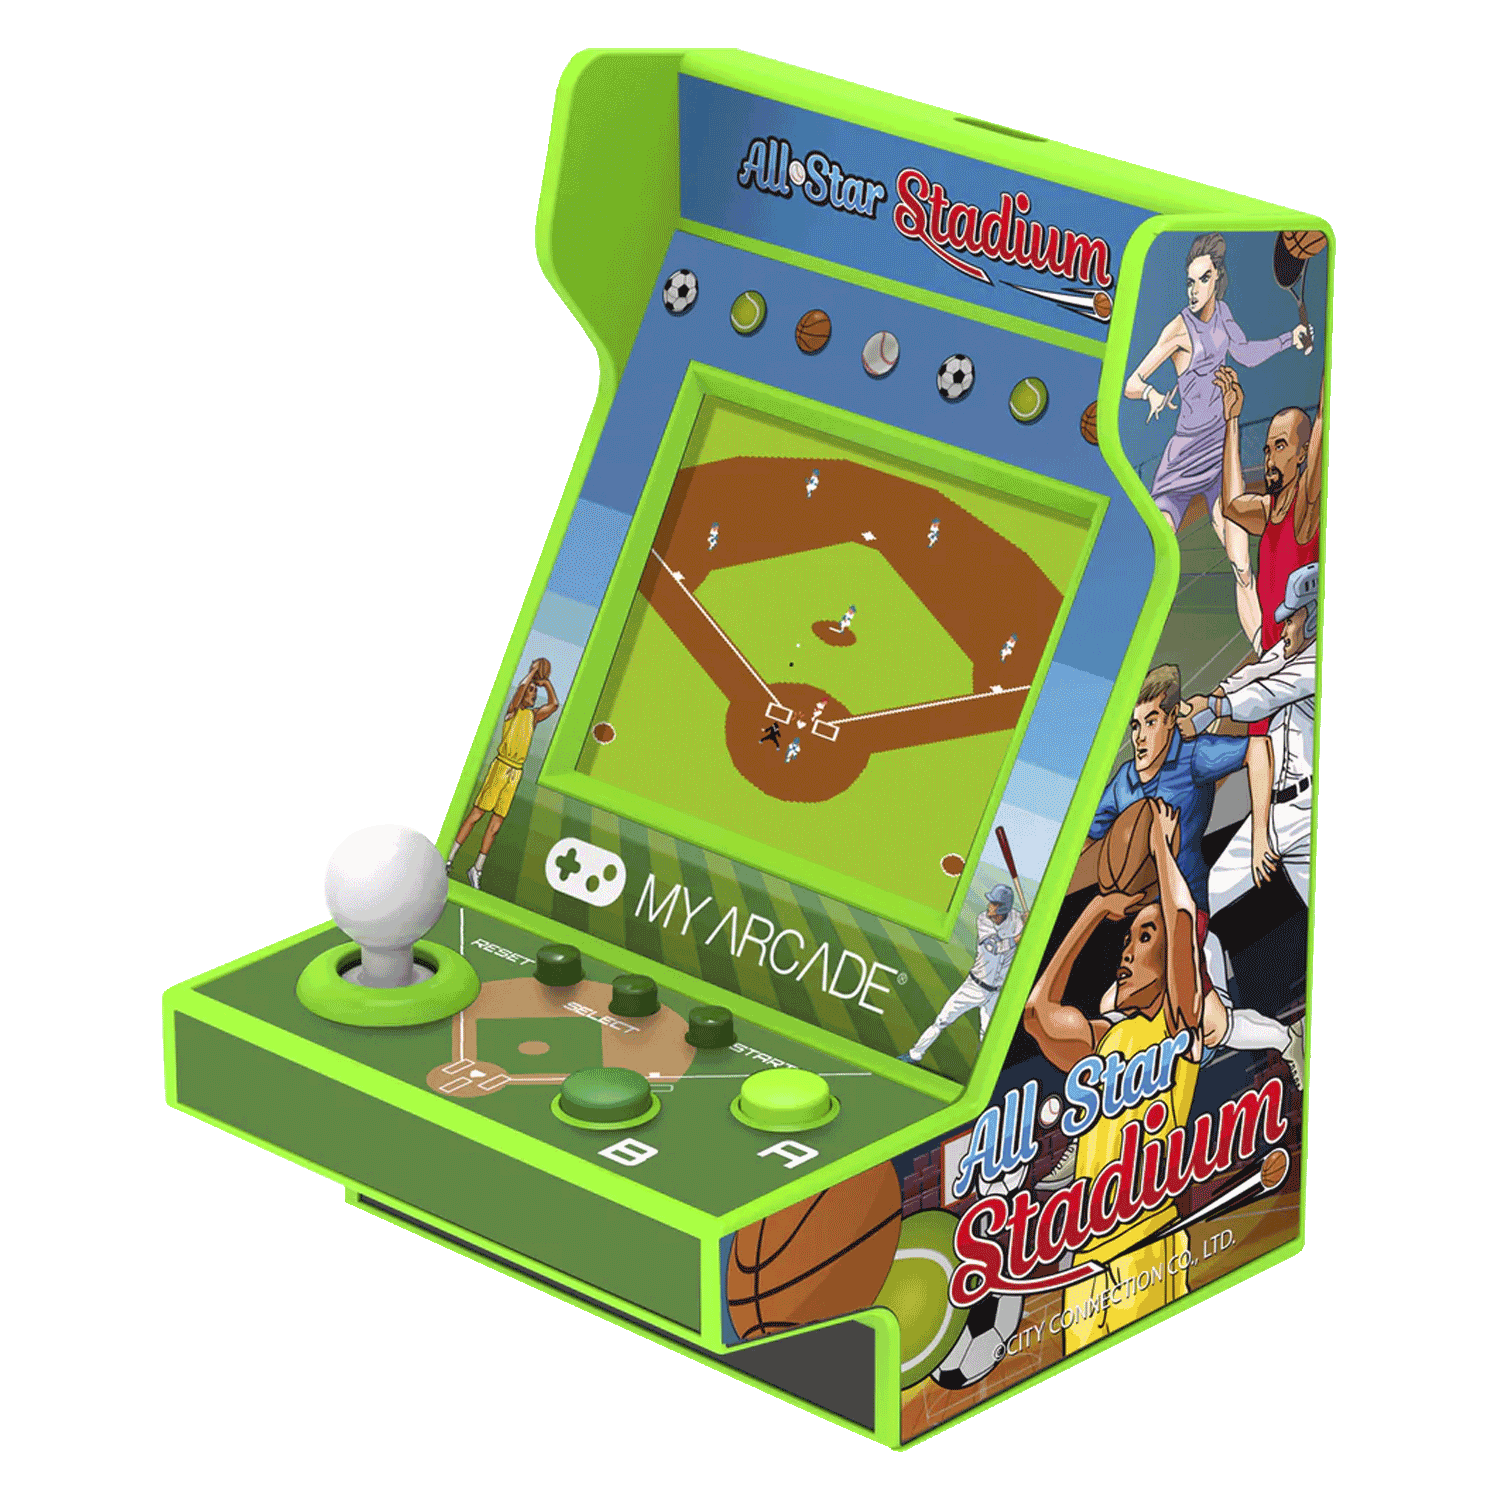 Console My Arcade All Star Stadium Micro Player - DGUNL-4126